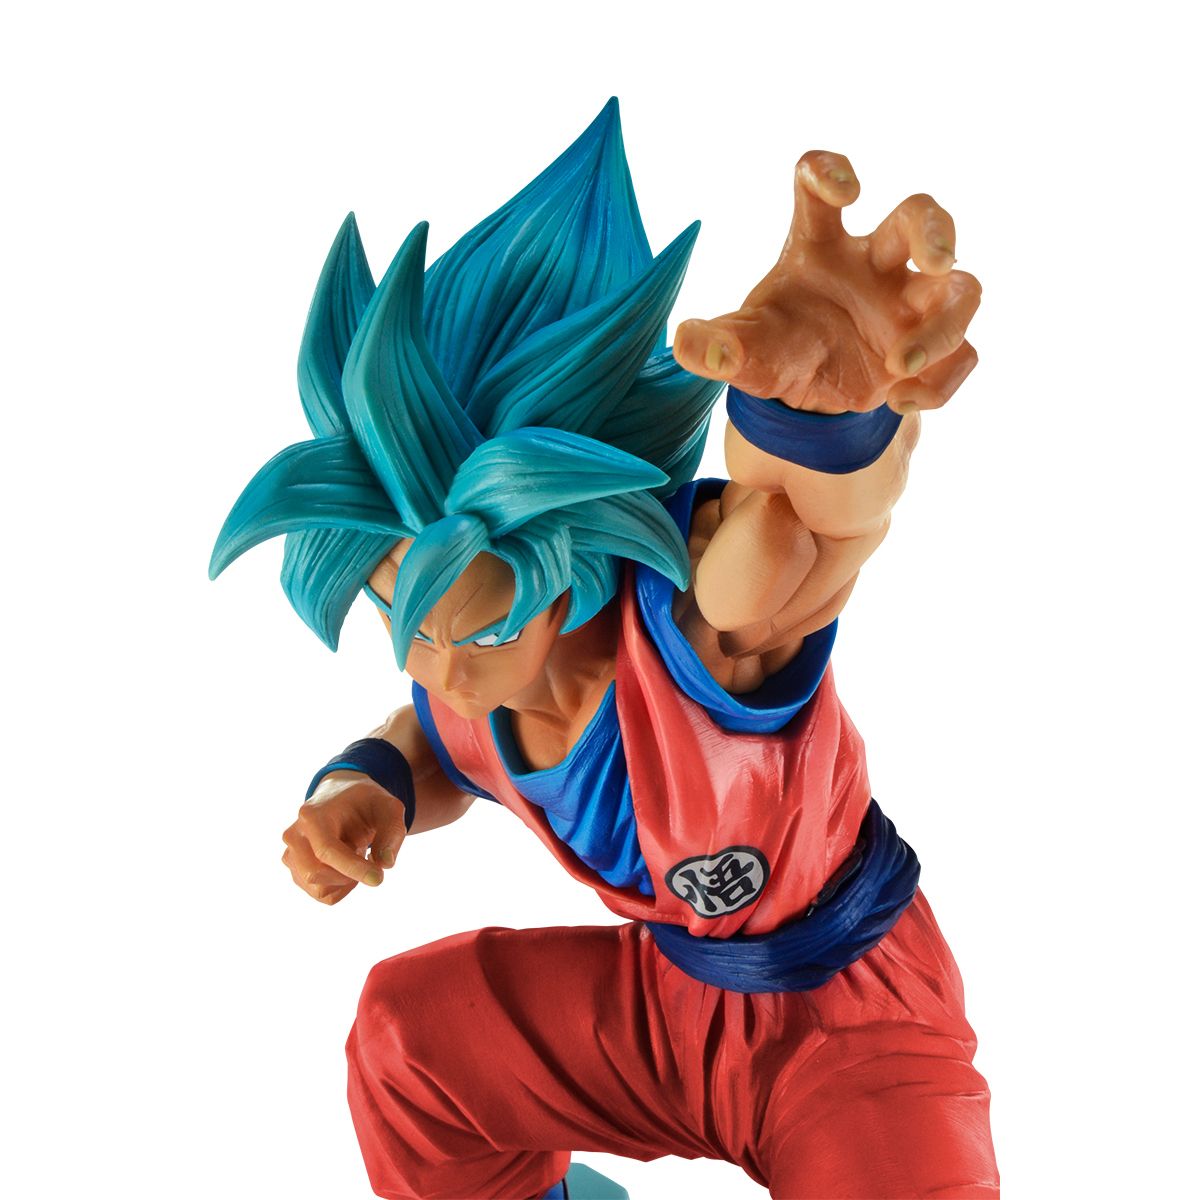 Banpresto Dragon Ball Super Goku Super Saiyajin Blue Big Size Figure